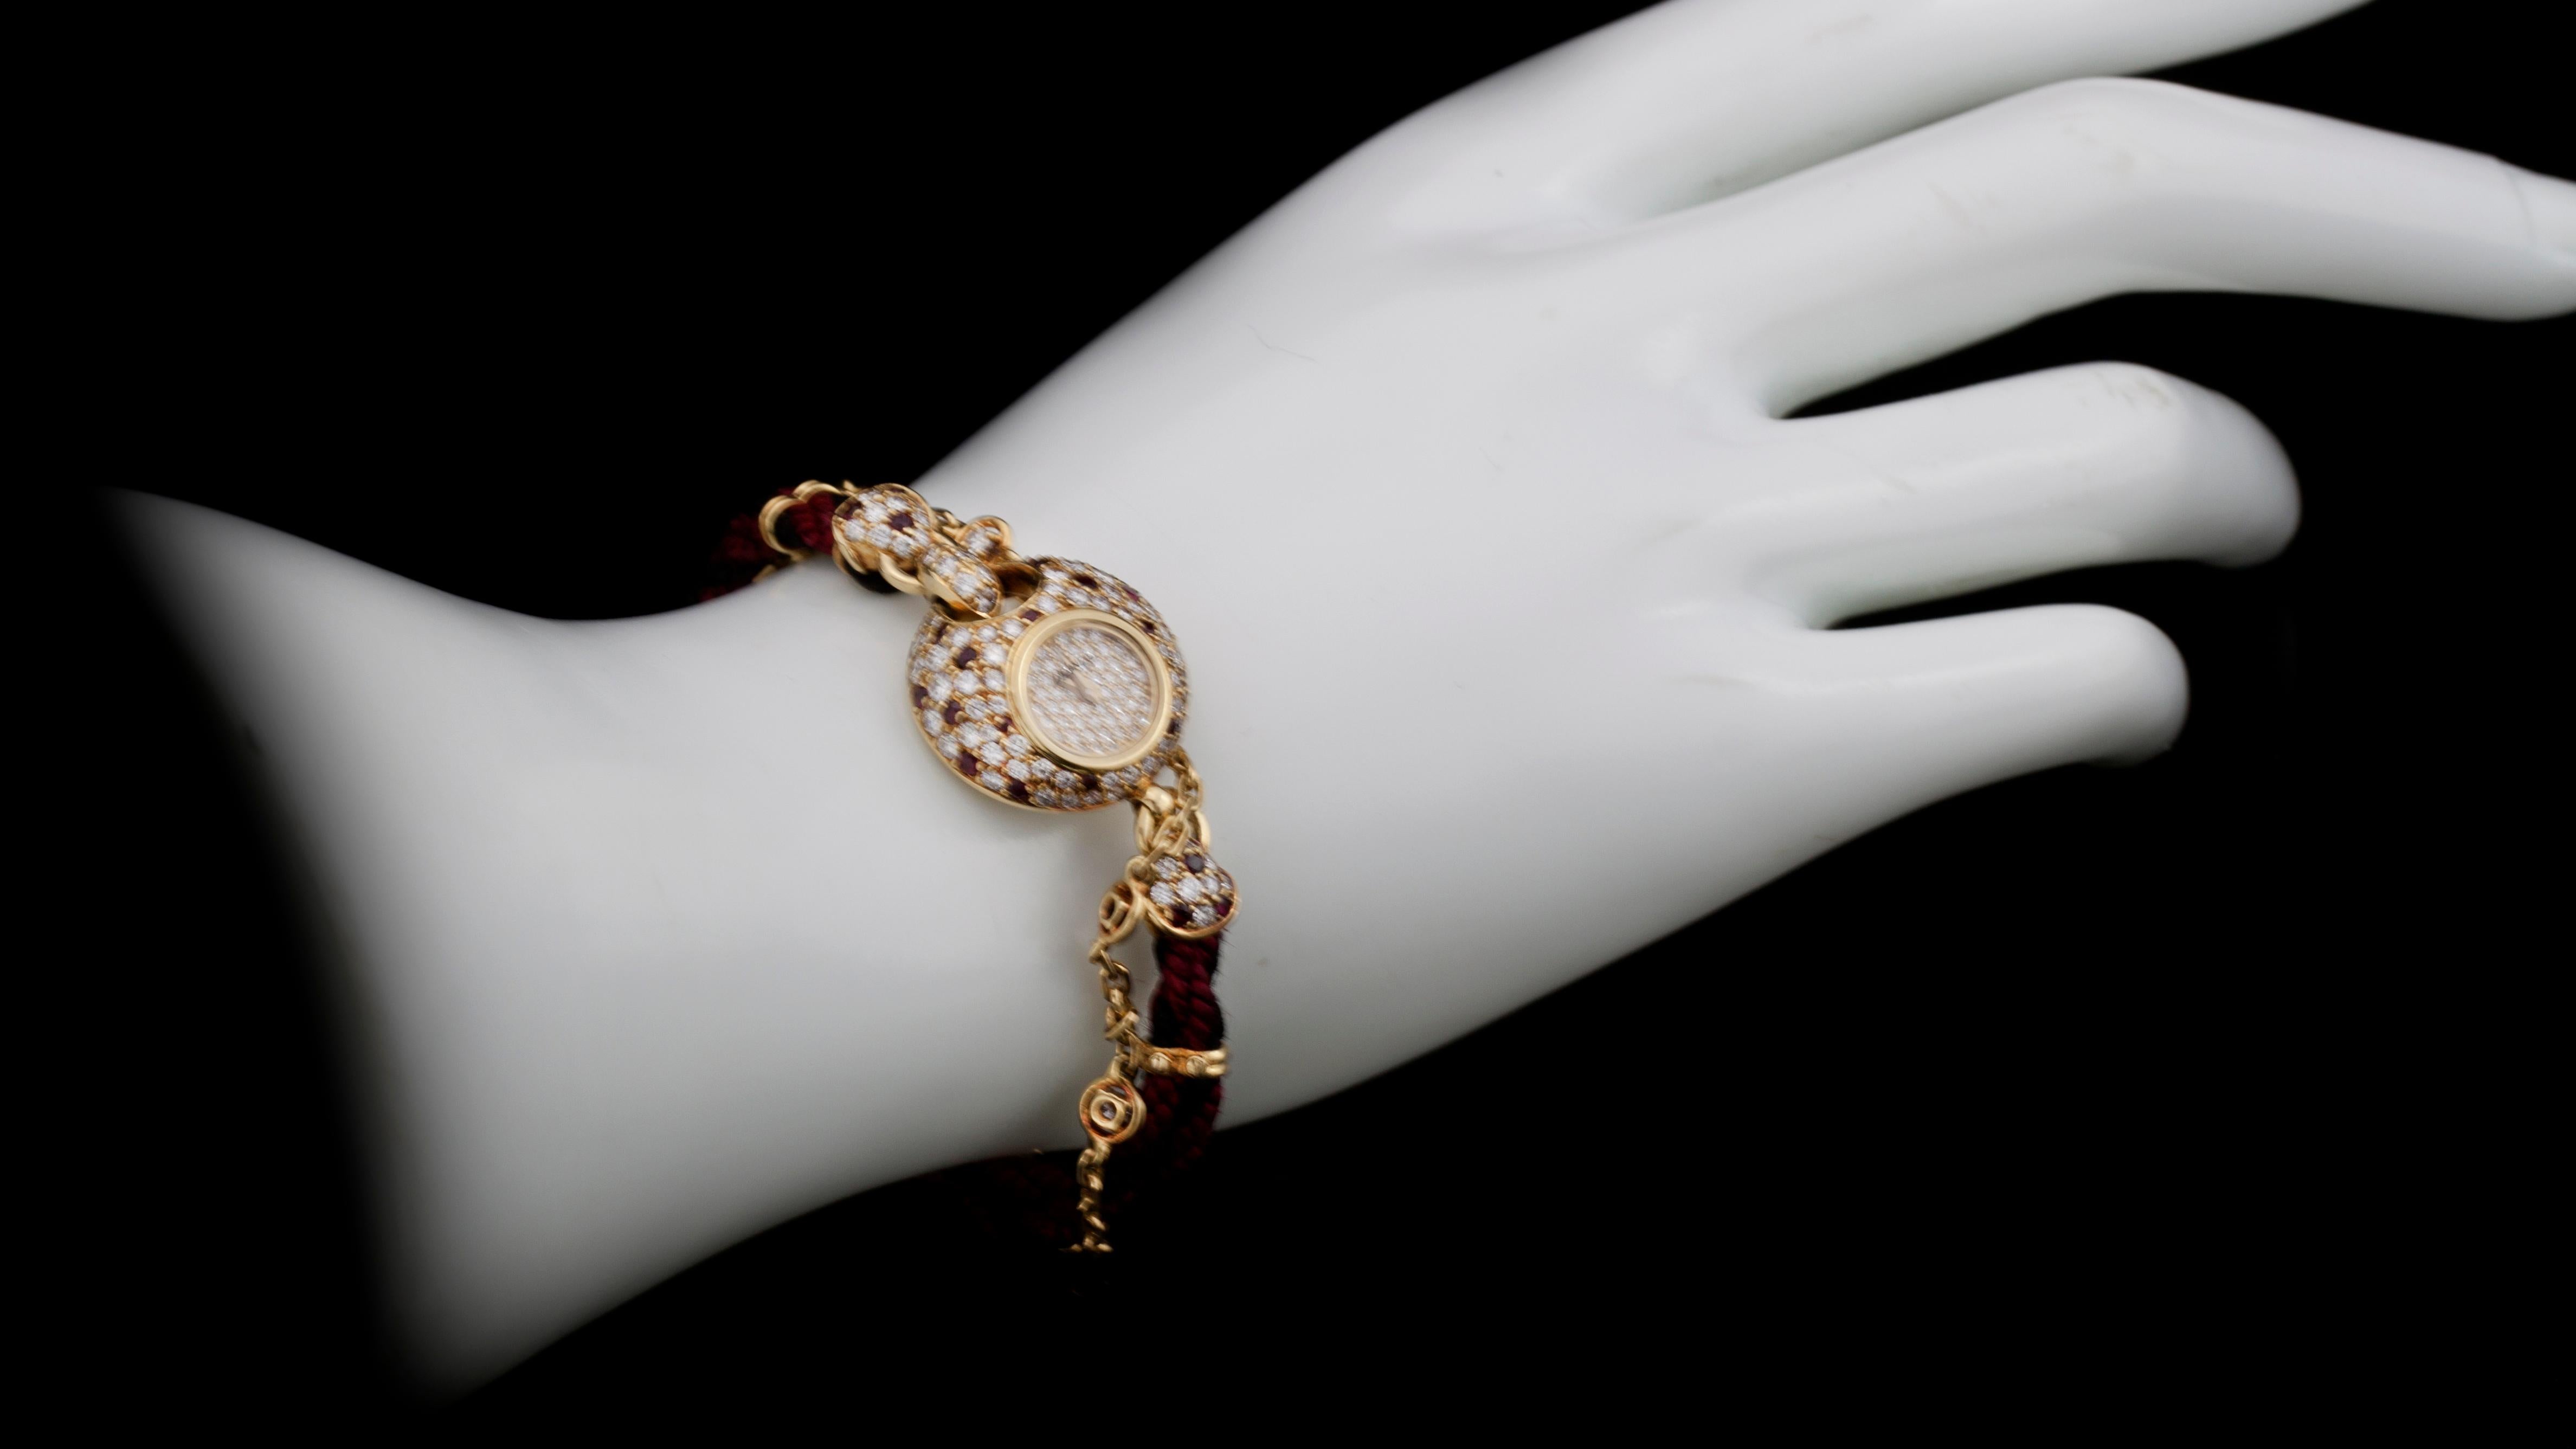 Dalaneau 18 Karat Gold Ladies Bracelet Watch with Diamonds and Rubies, 1980s 3